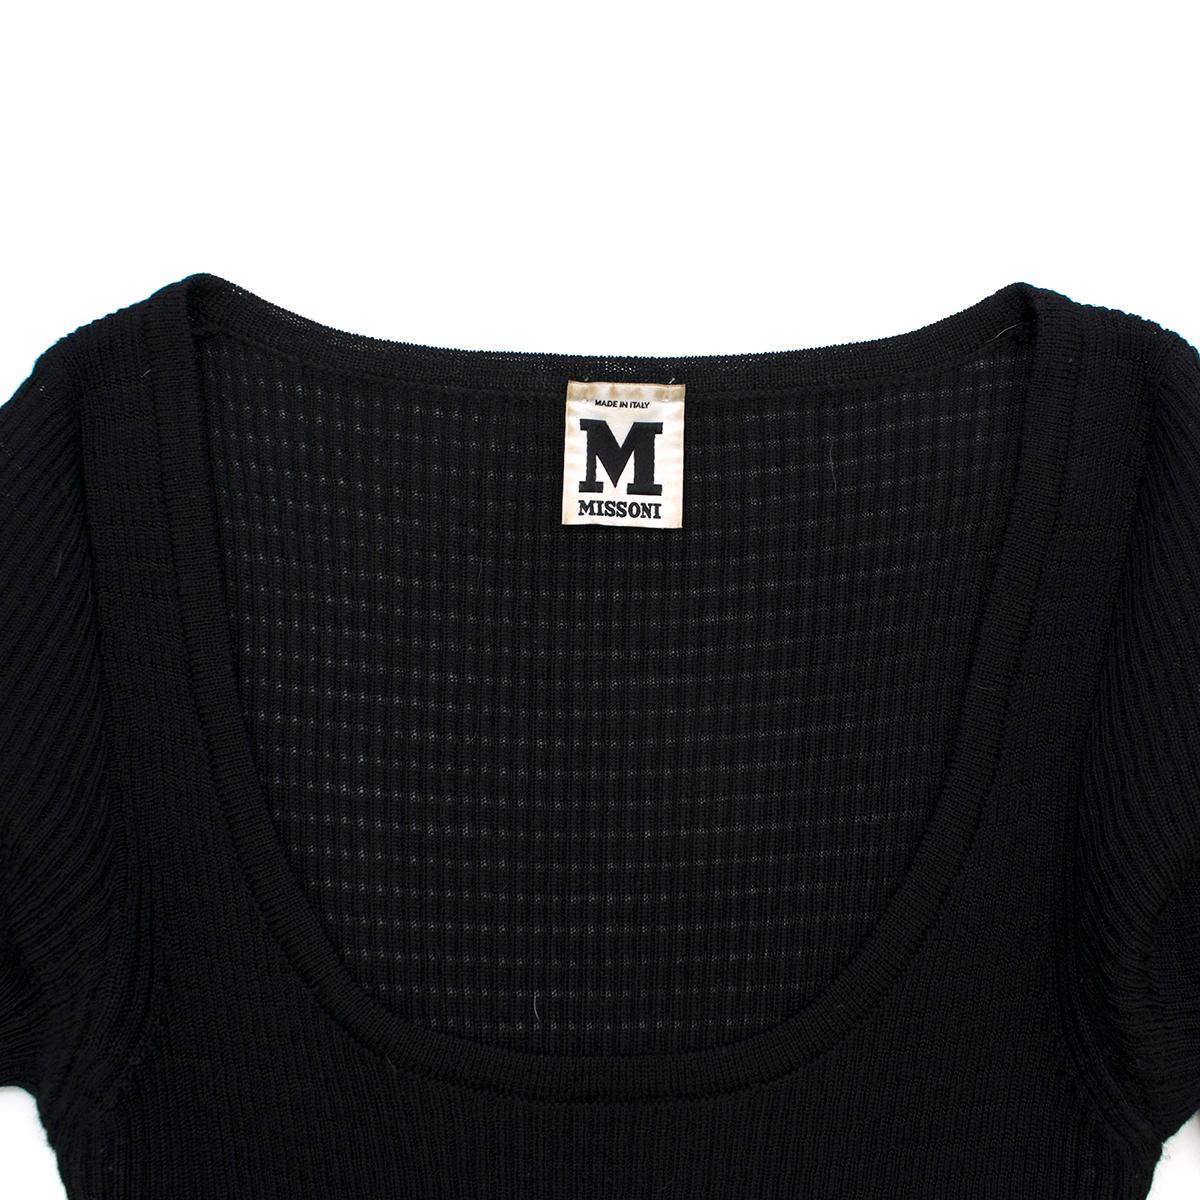 Women's Missoni Black Crotchet Knit-Patterned Stretch Rope Dress - Size US 4